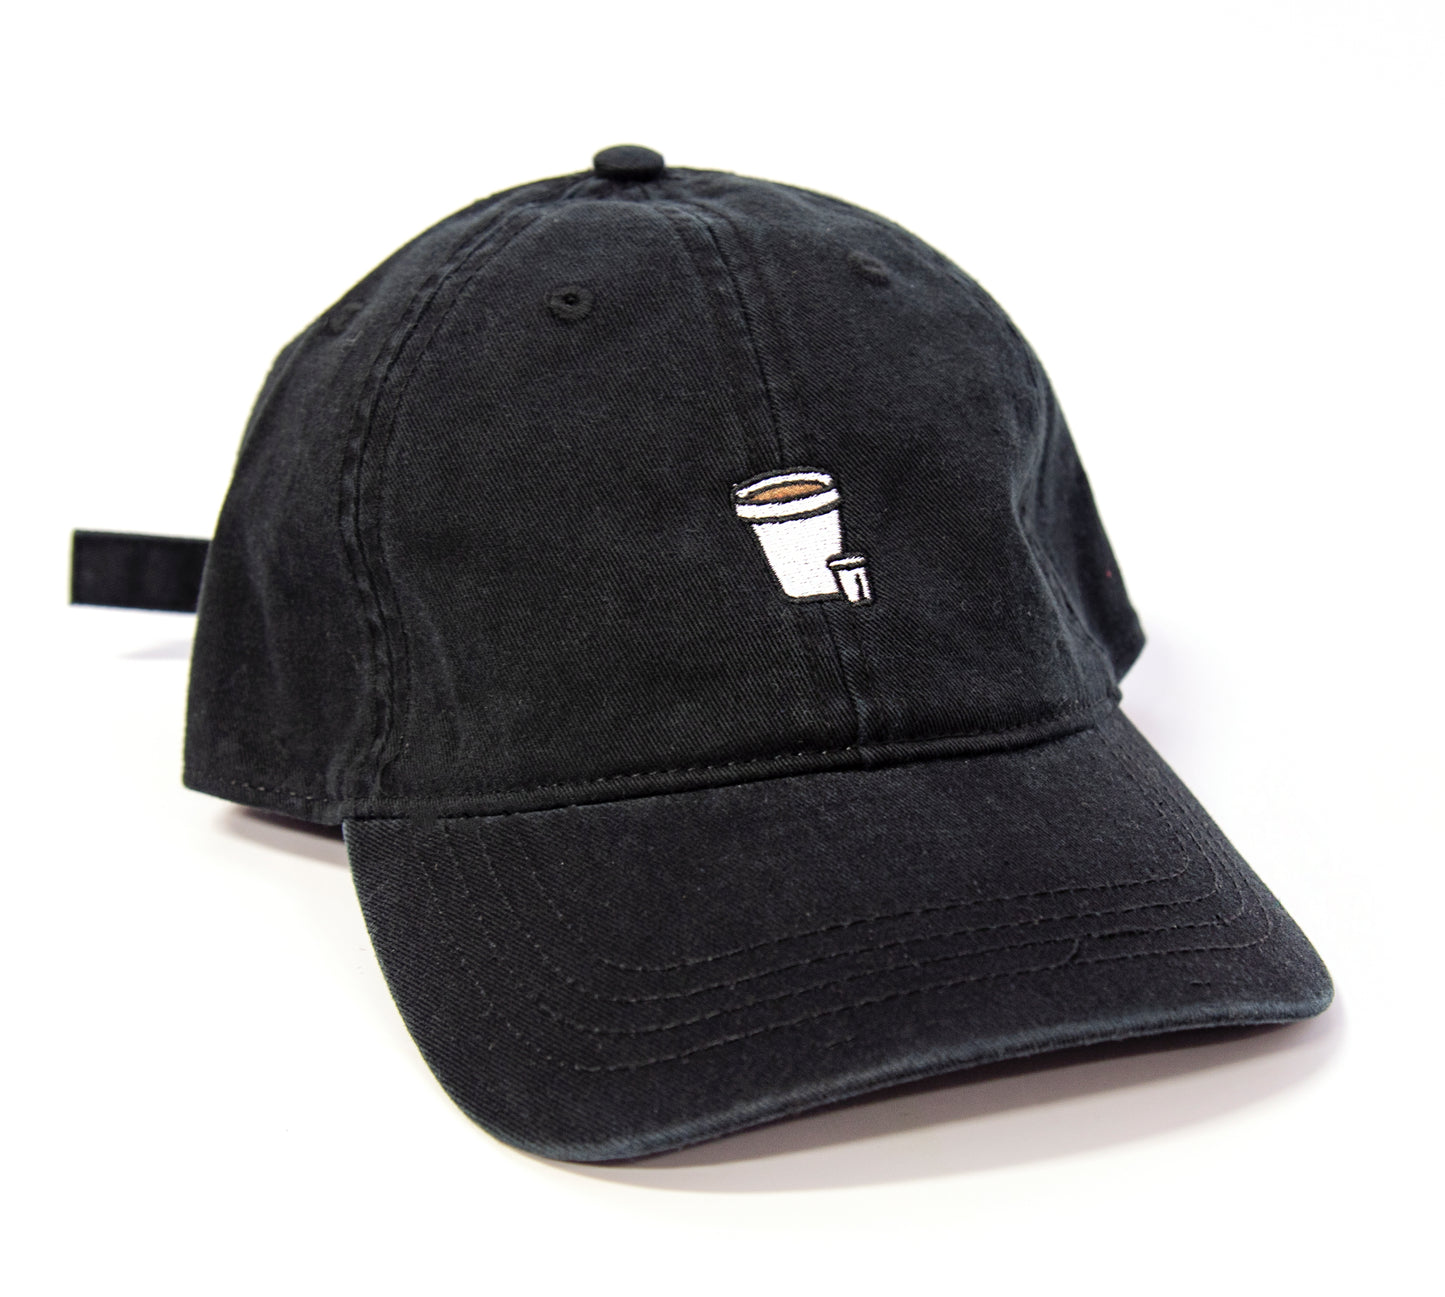 PAMM Hat: Cafecito